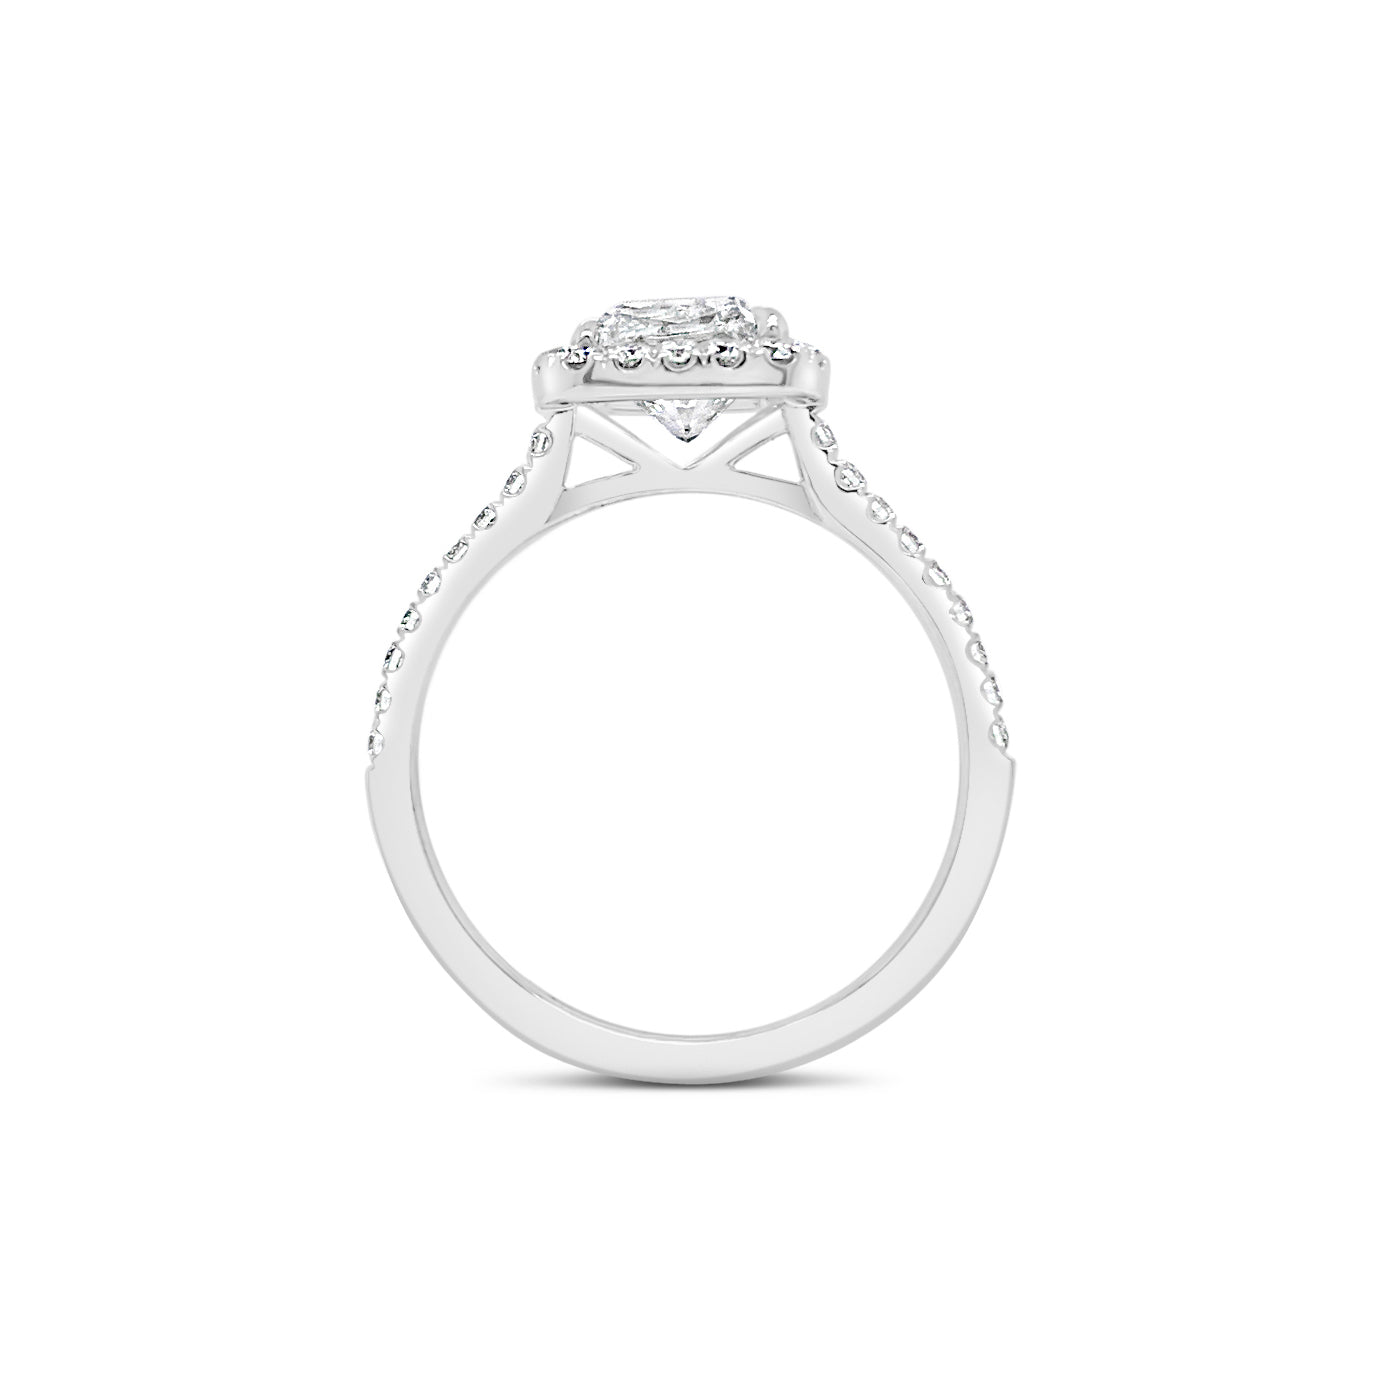 Cushion Halo Diamond Engagement Ring  -18K weighting 2.62 GR  - 36 round diamonds totaling .33 carats